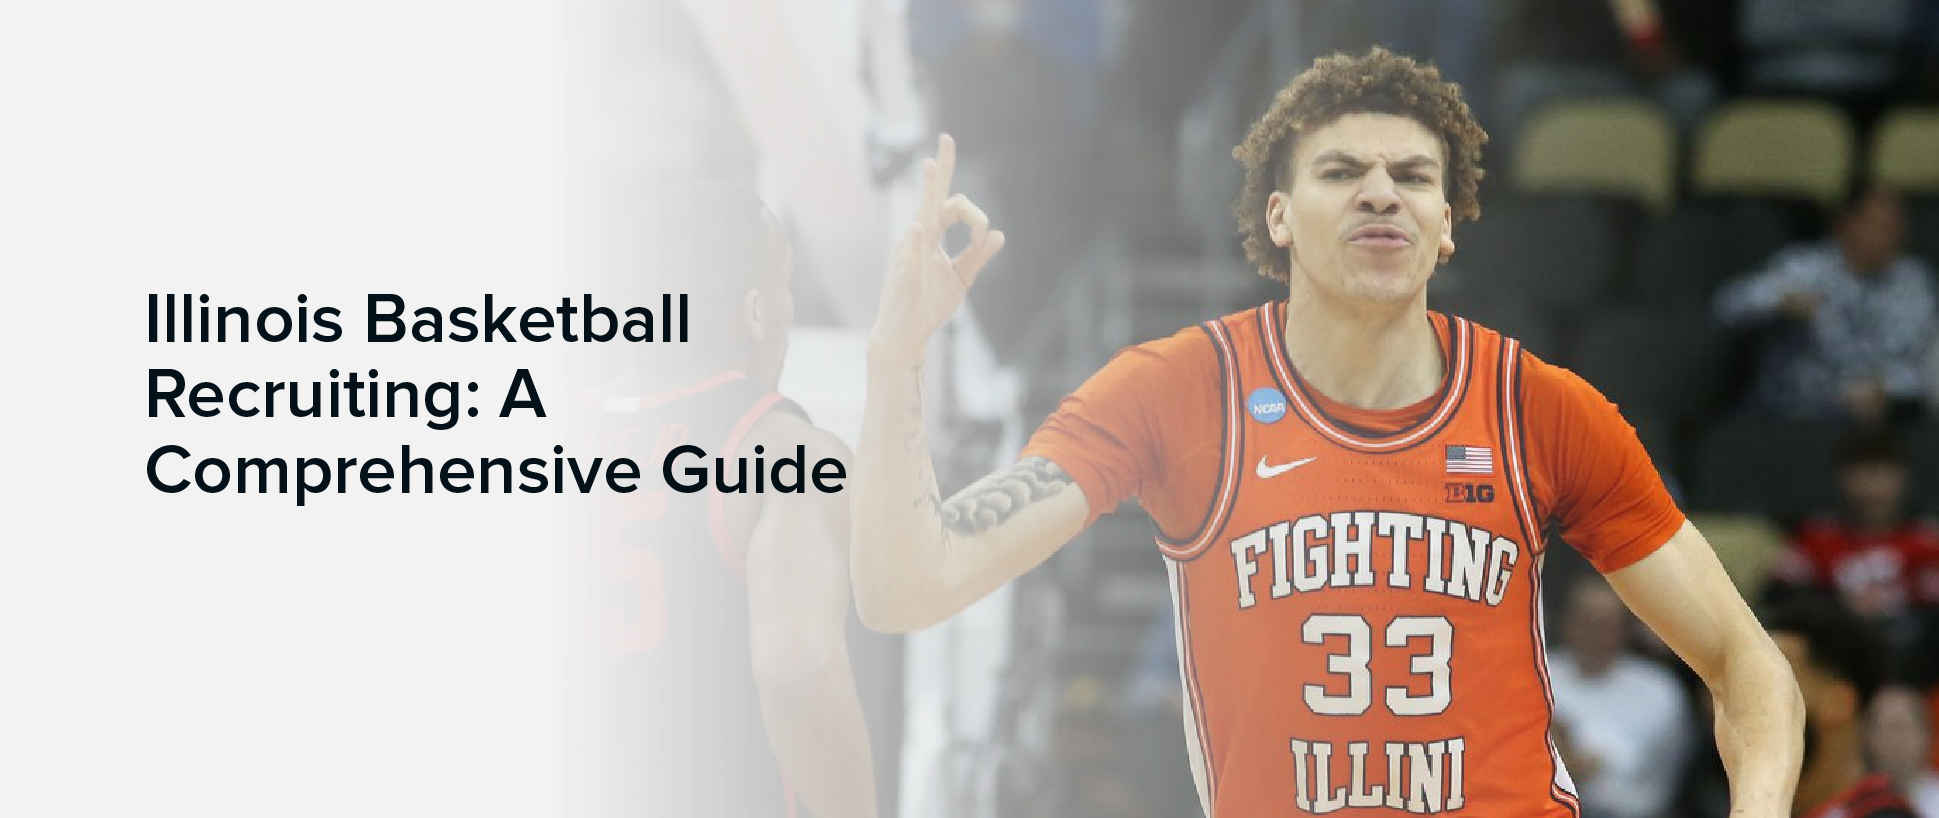 Illinois Basketball Recruiting: A Comprehensive Guide